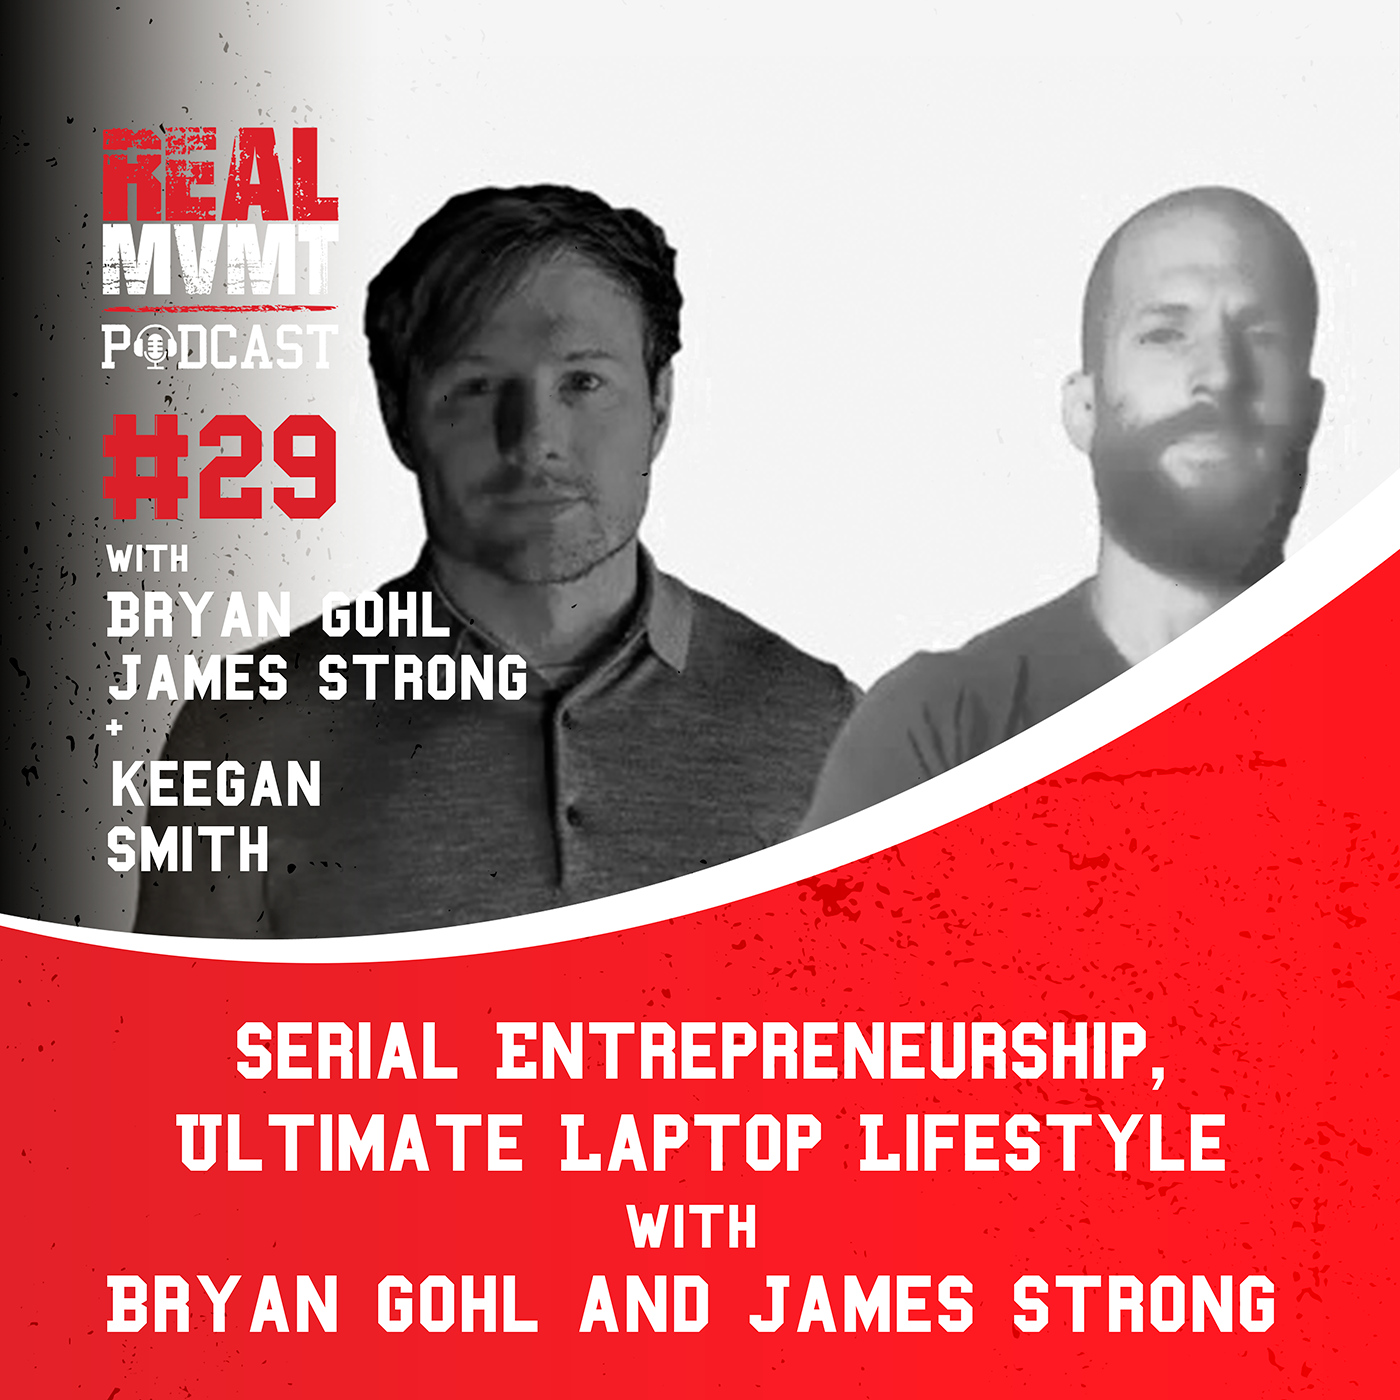 Serial Entrepreneurship, Ultimate Laptop Lifestyle - Bryan Gohl & James Strong